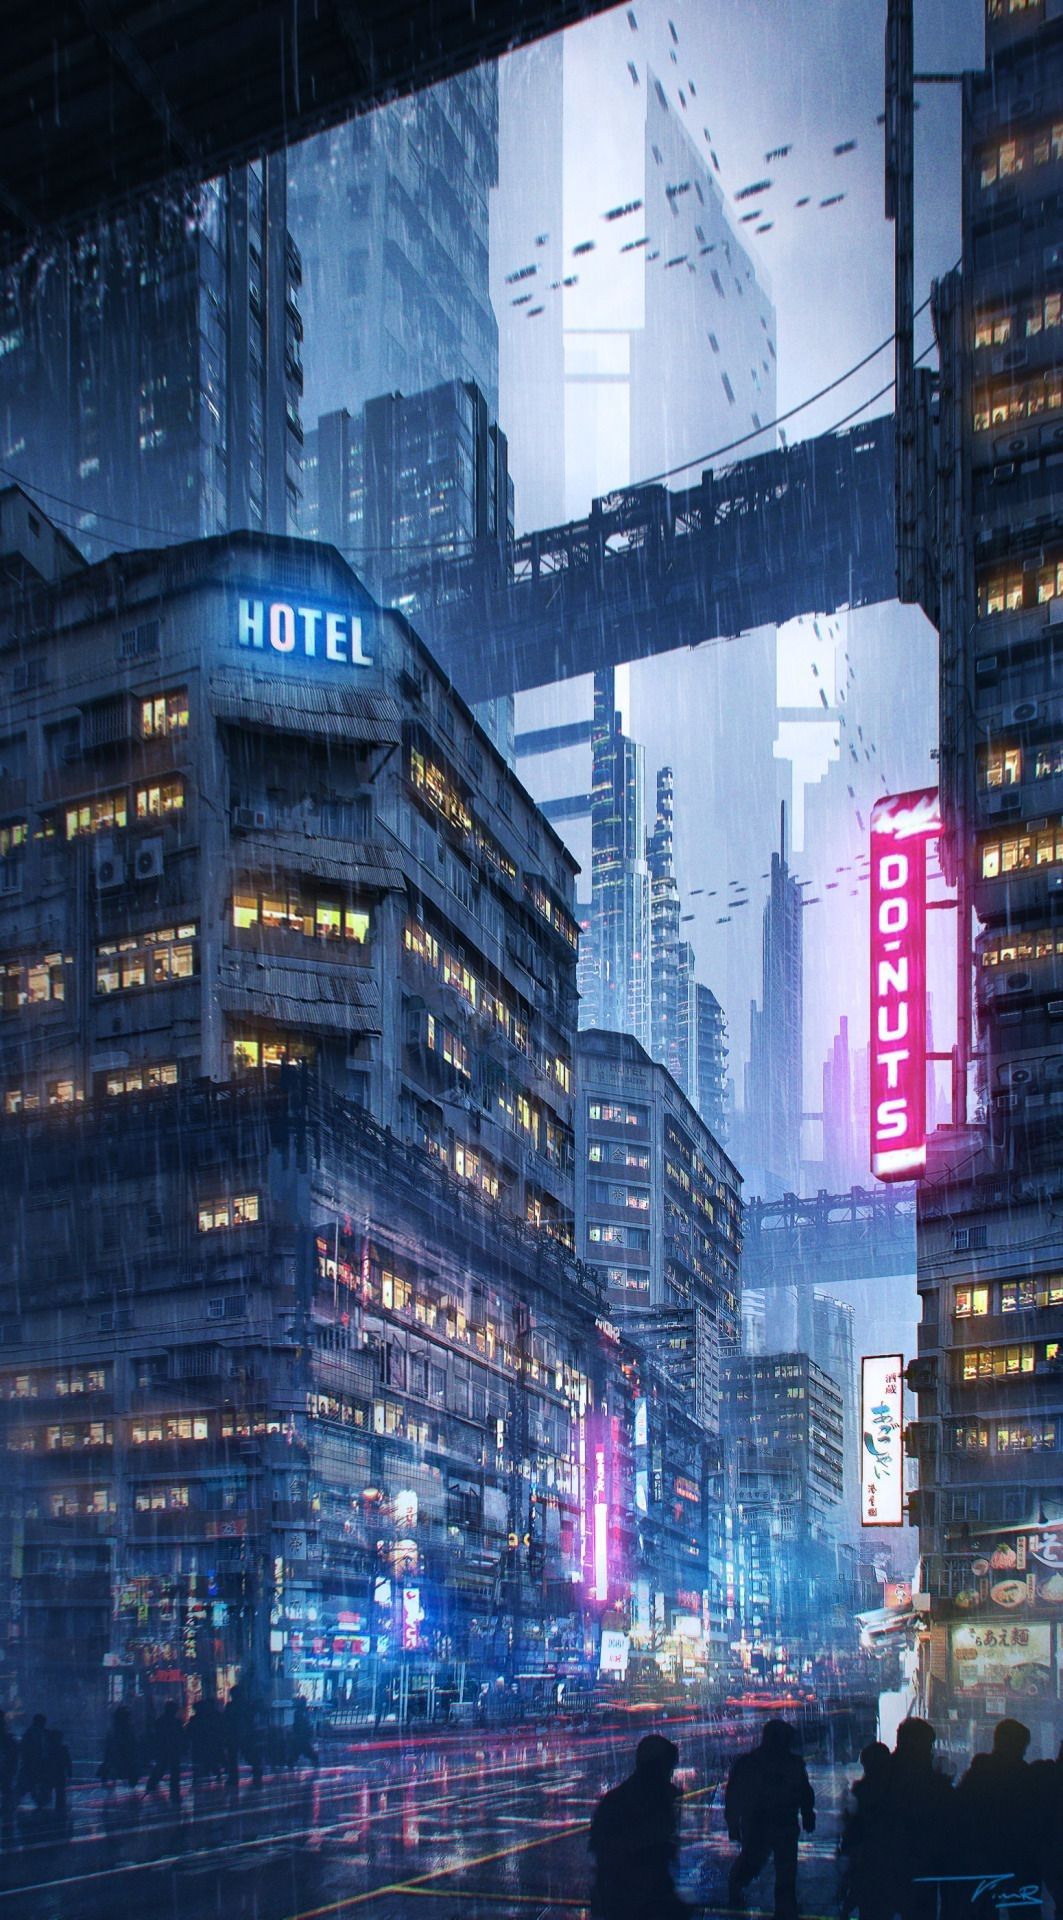 Cyberpunk City Night Time HD Live Wallpaper Best Of Cyberpunk Future City Inspiration. Cyberpunk city, Futuristic city, Sci fi city